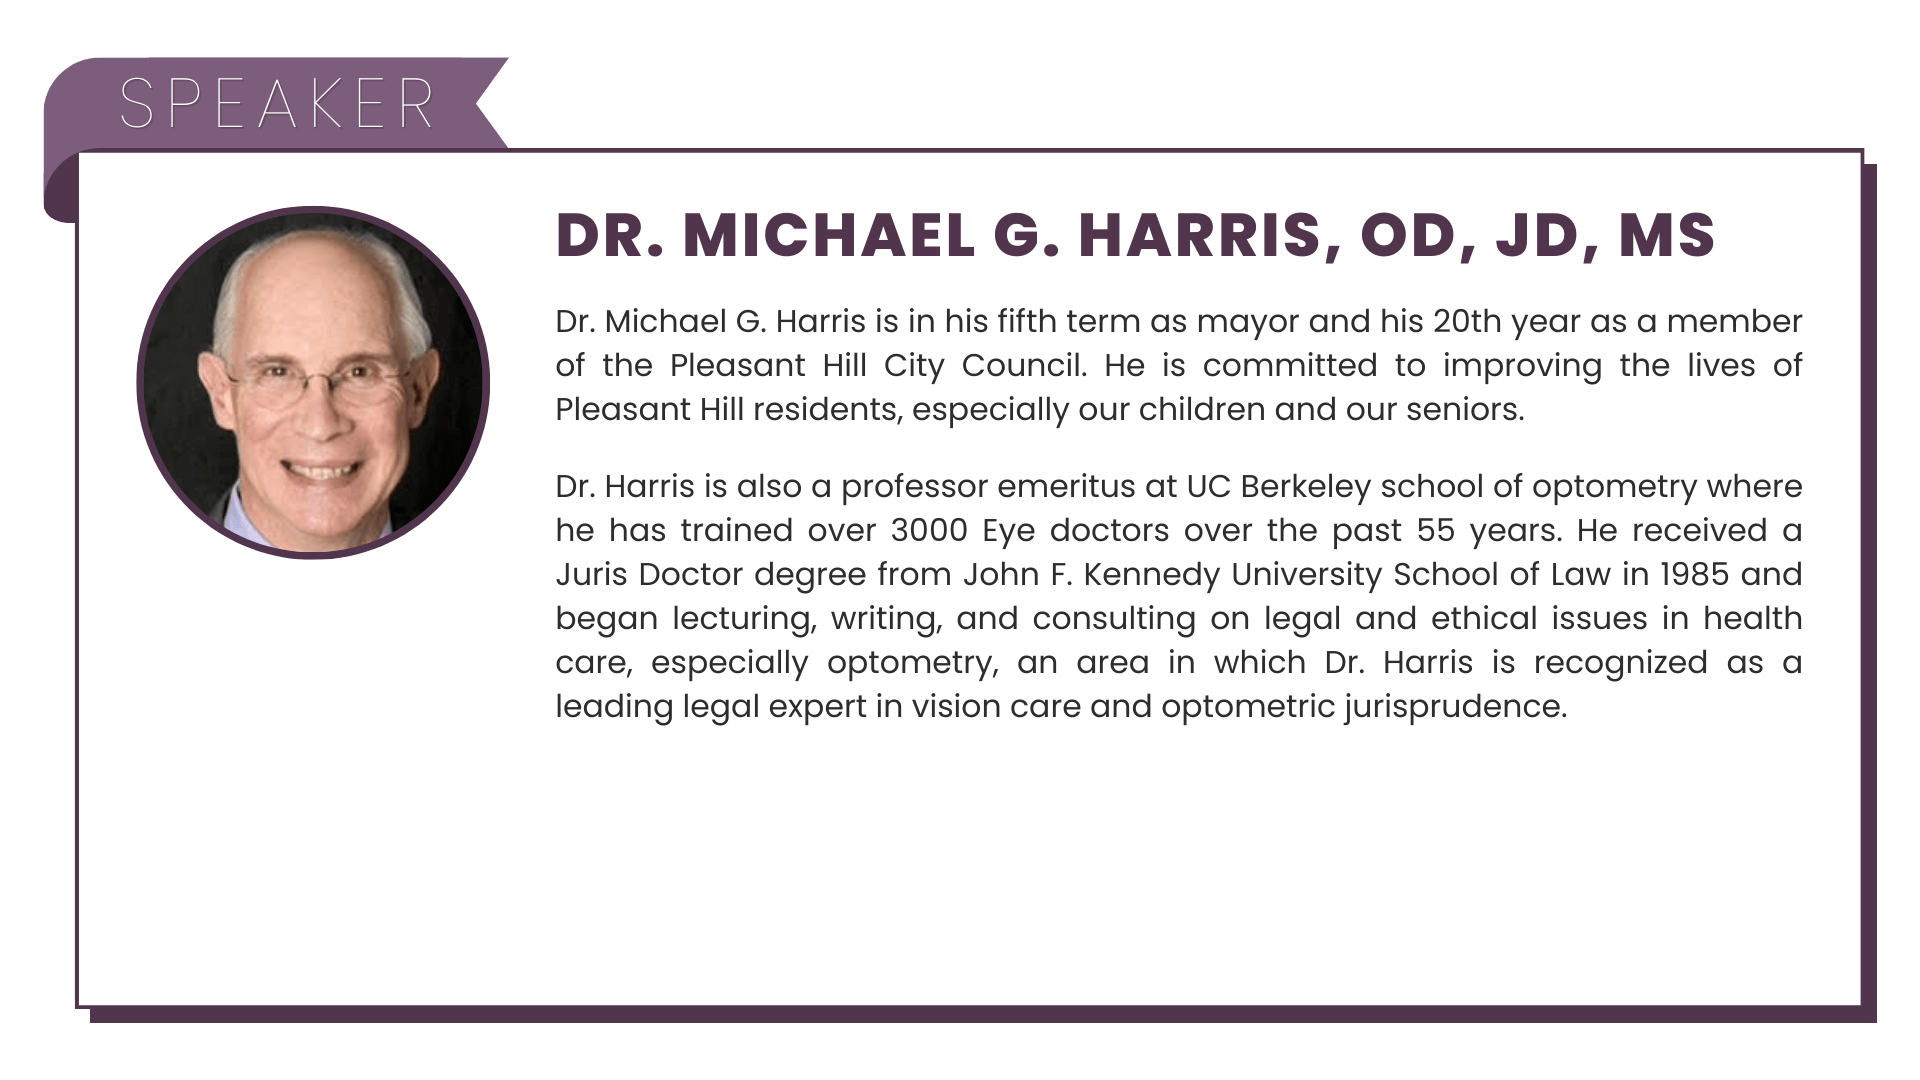 Biography of Dr. Michael Harris